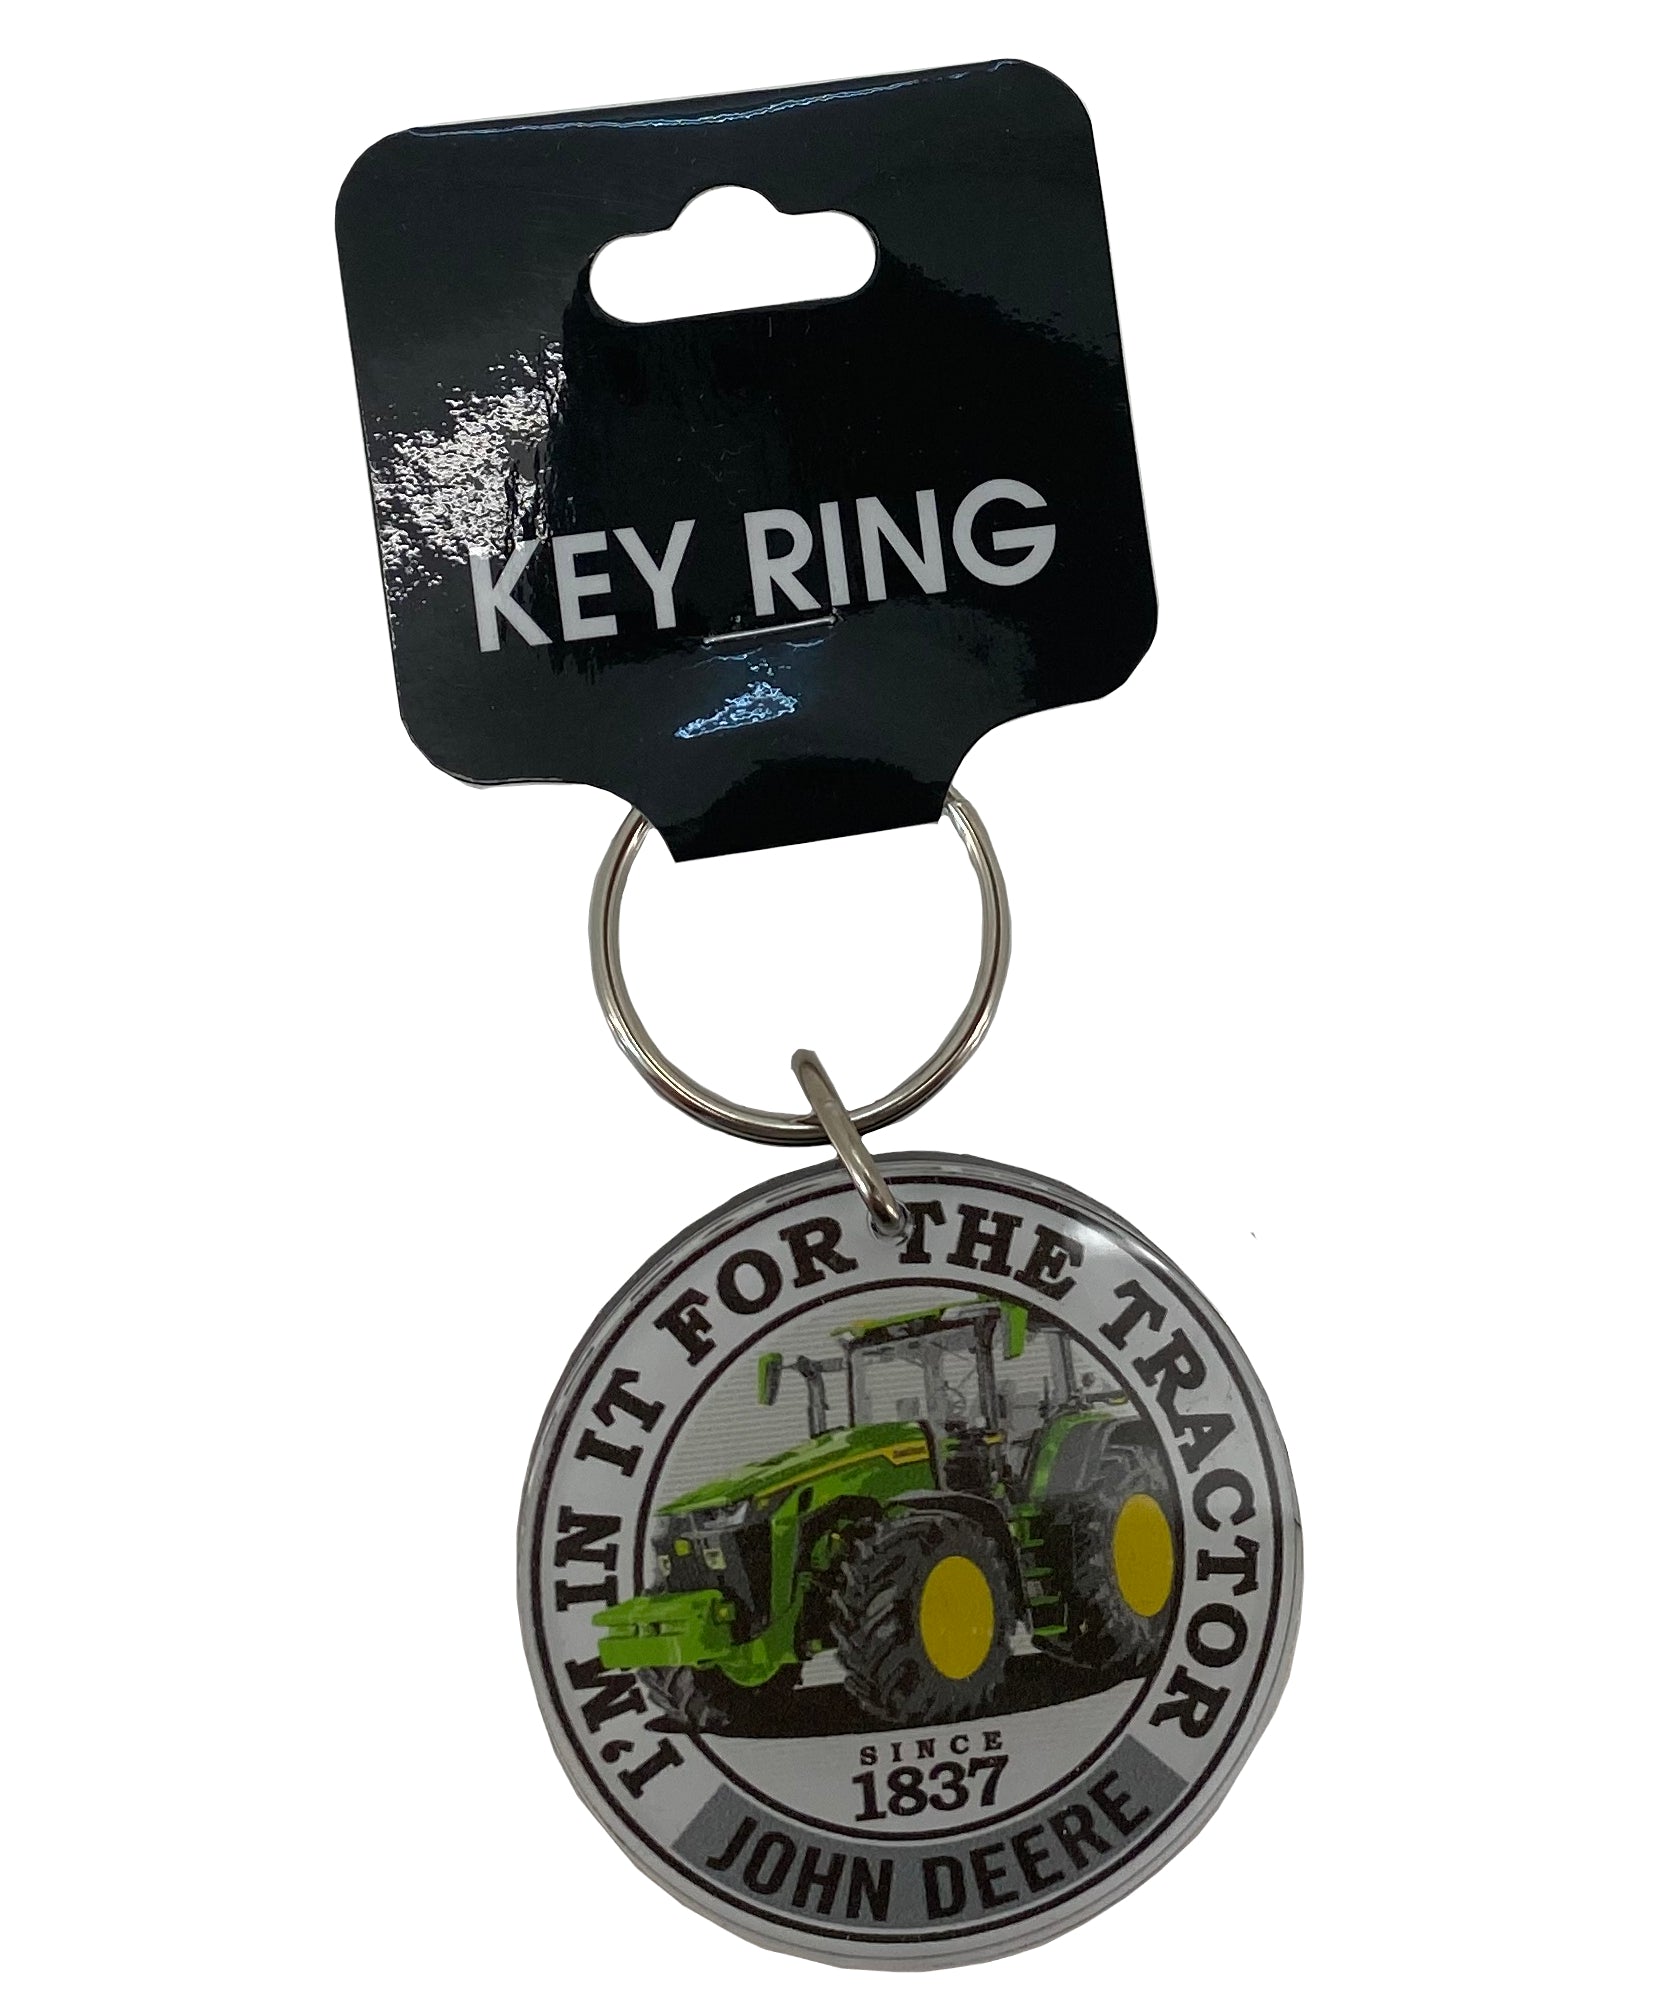 John Deere Trademark Key Ring